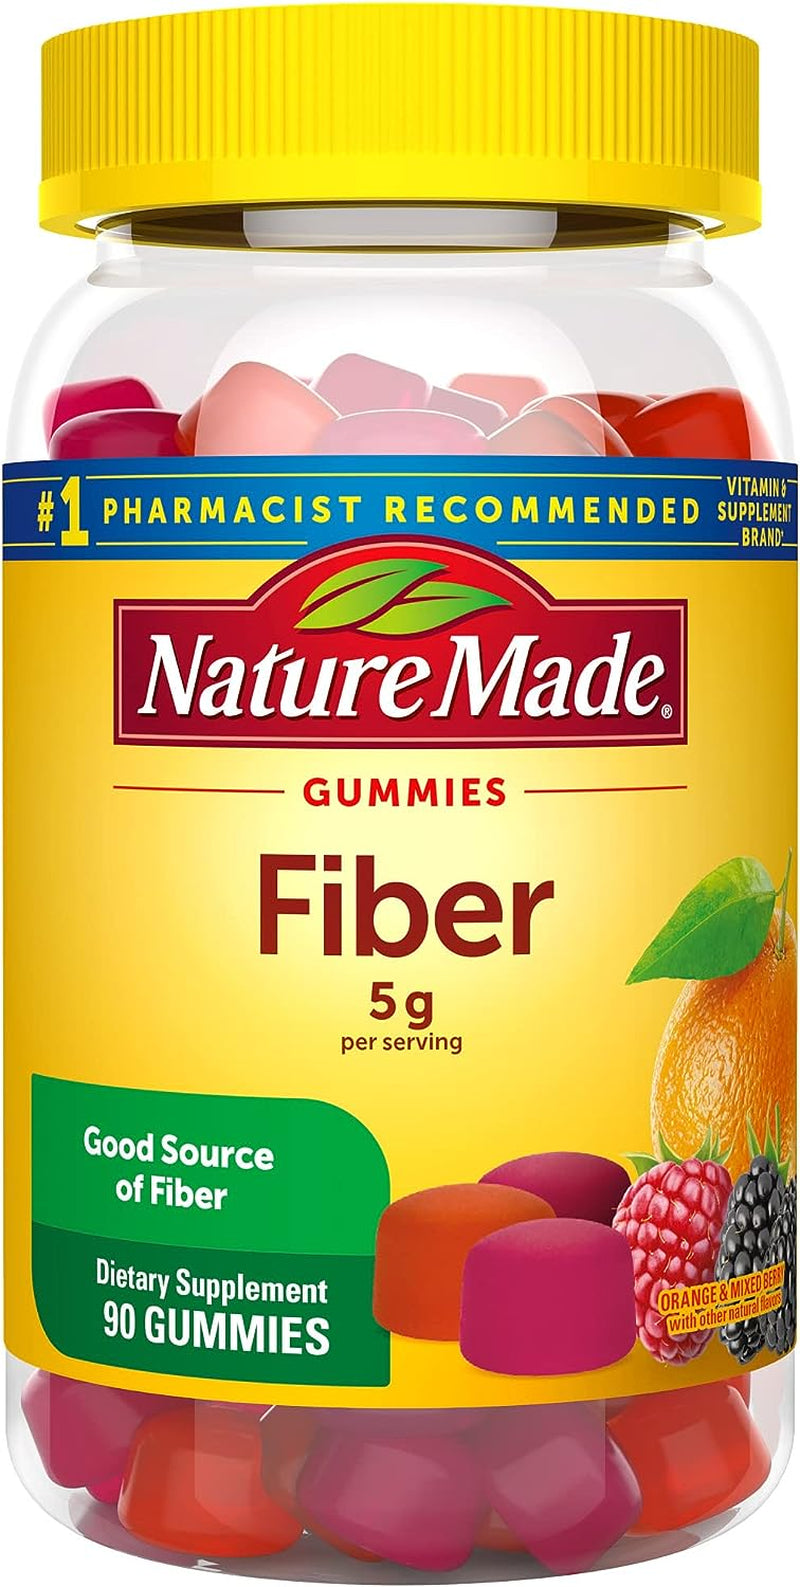 Nature Made Fiber Gummies 5 G per Serving, Fiber Supplement for Digestive Health Support, 90 Gummies, 30 Day Supply